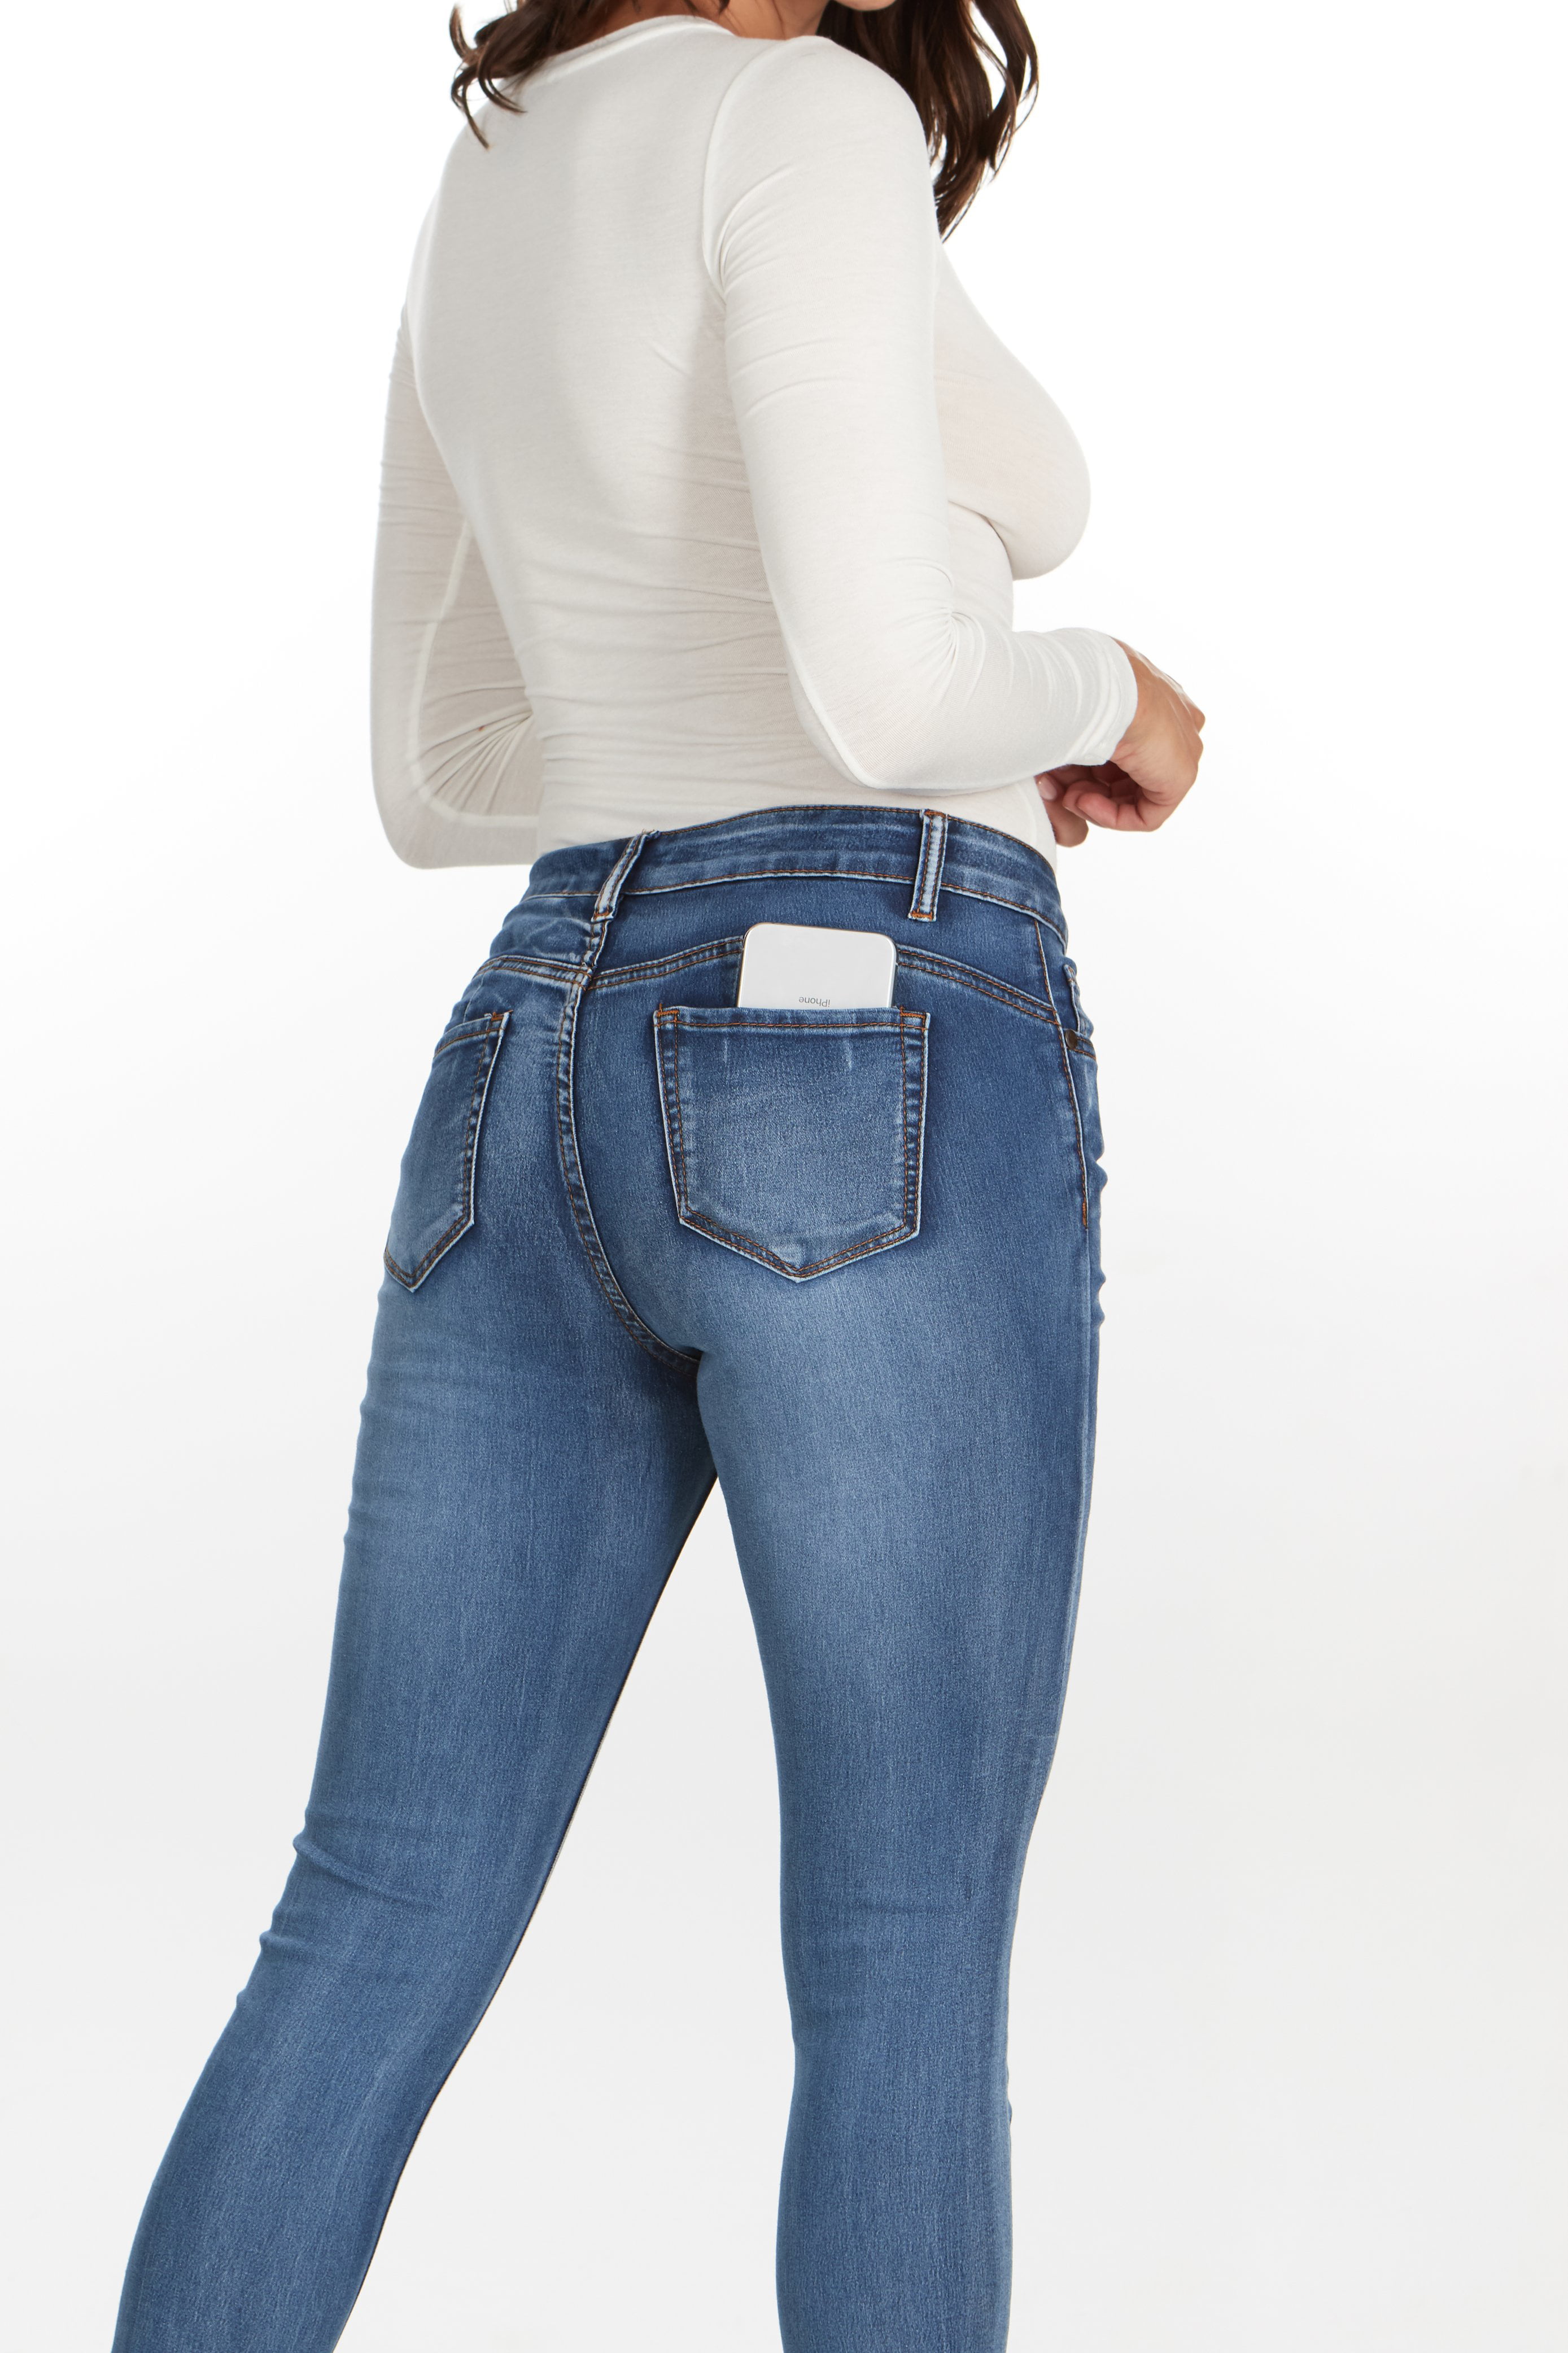 Women's Classic High Waist Skinny Jeans in Medium Blue Wash Size 0 by Fashion Nova